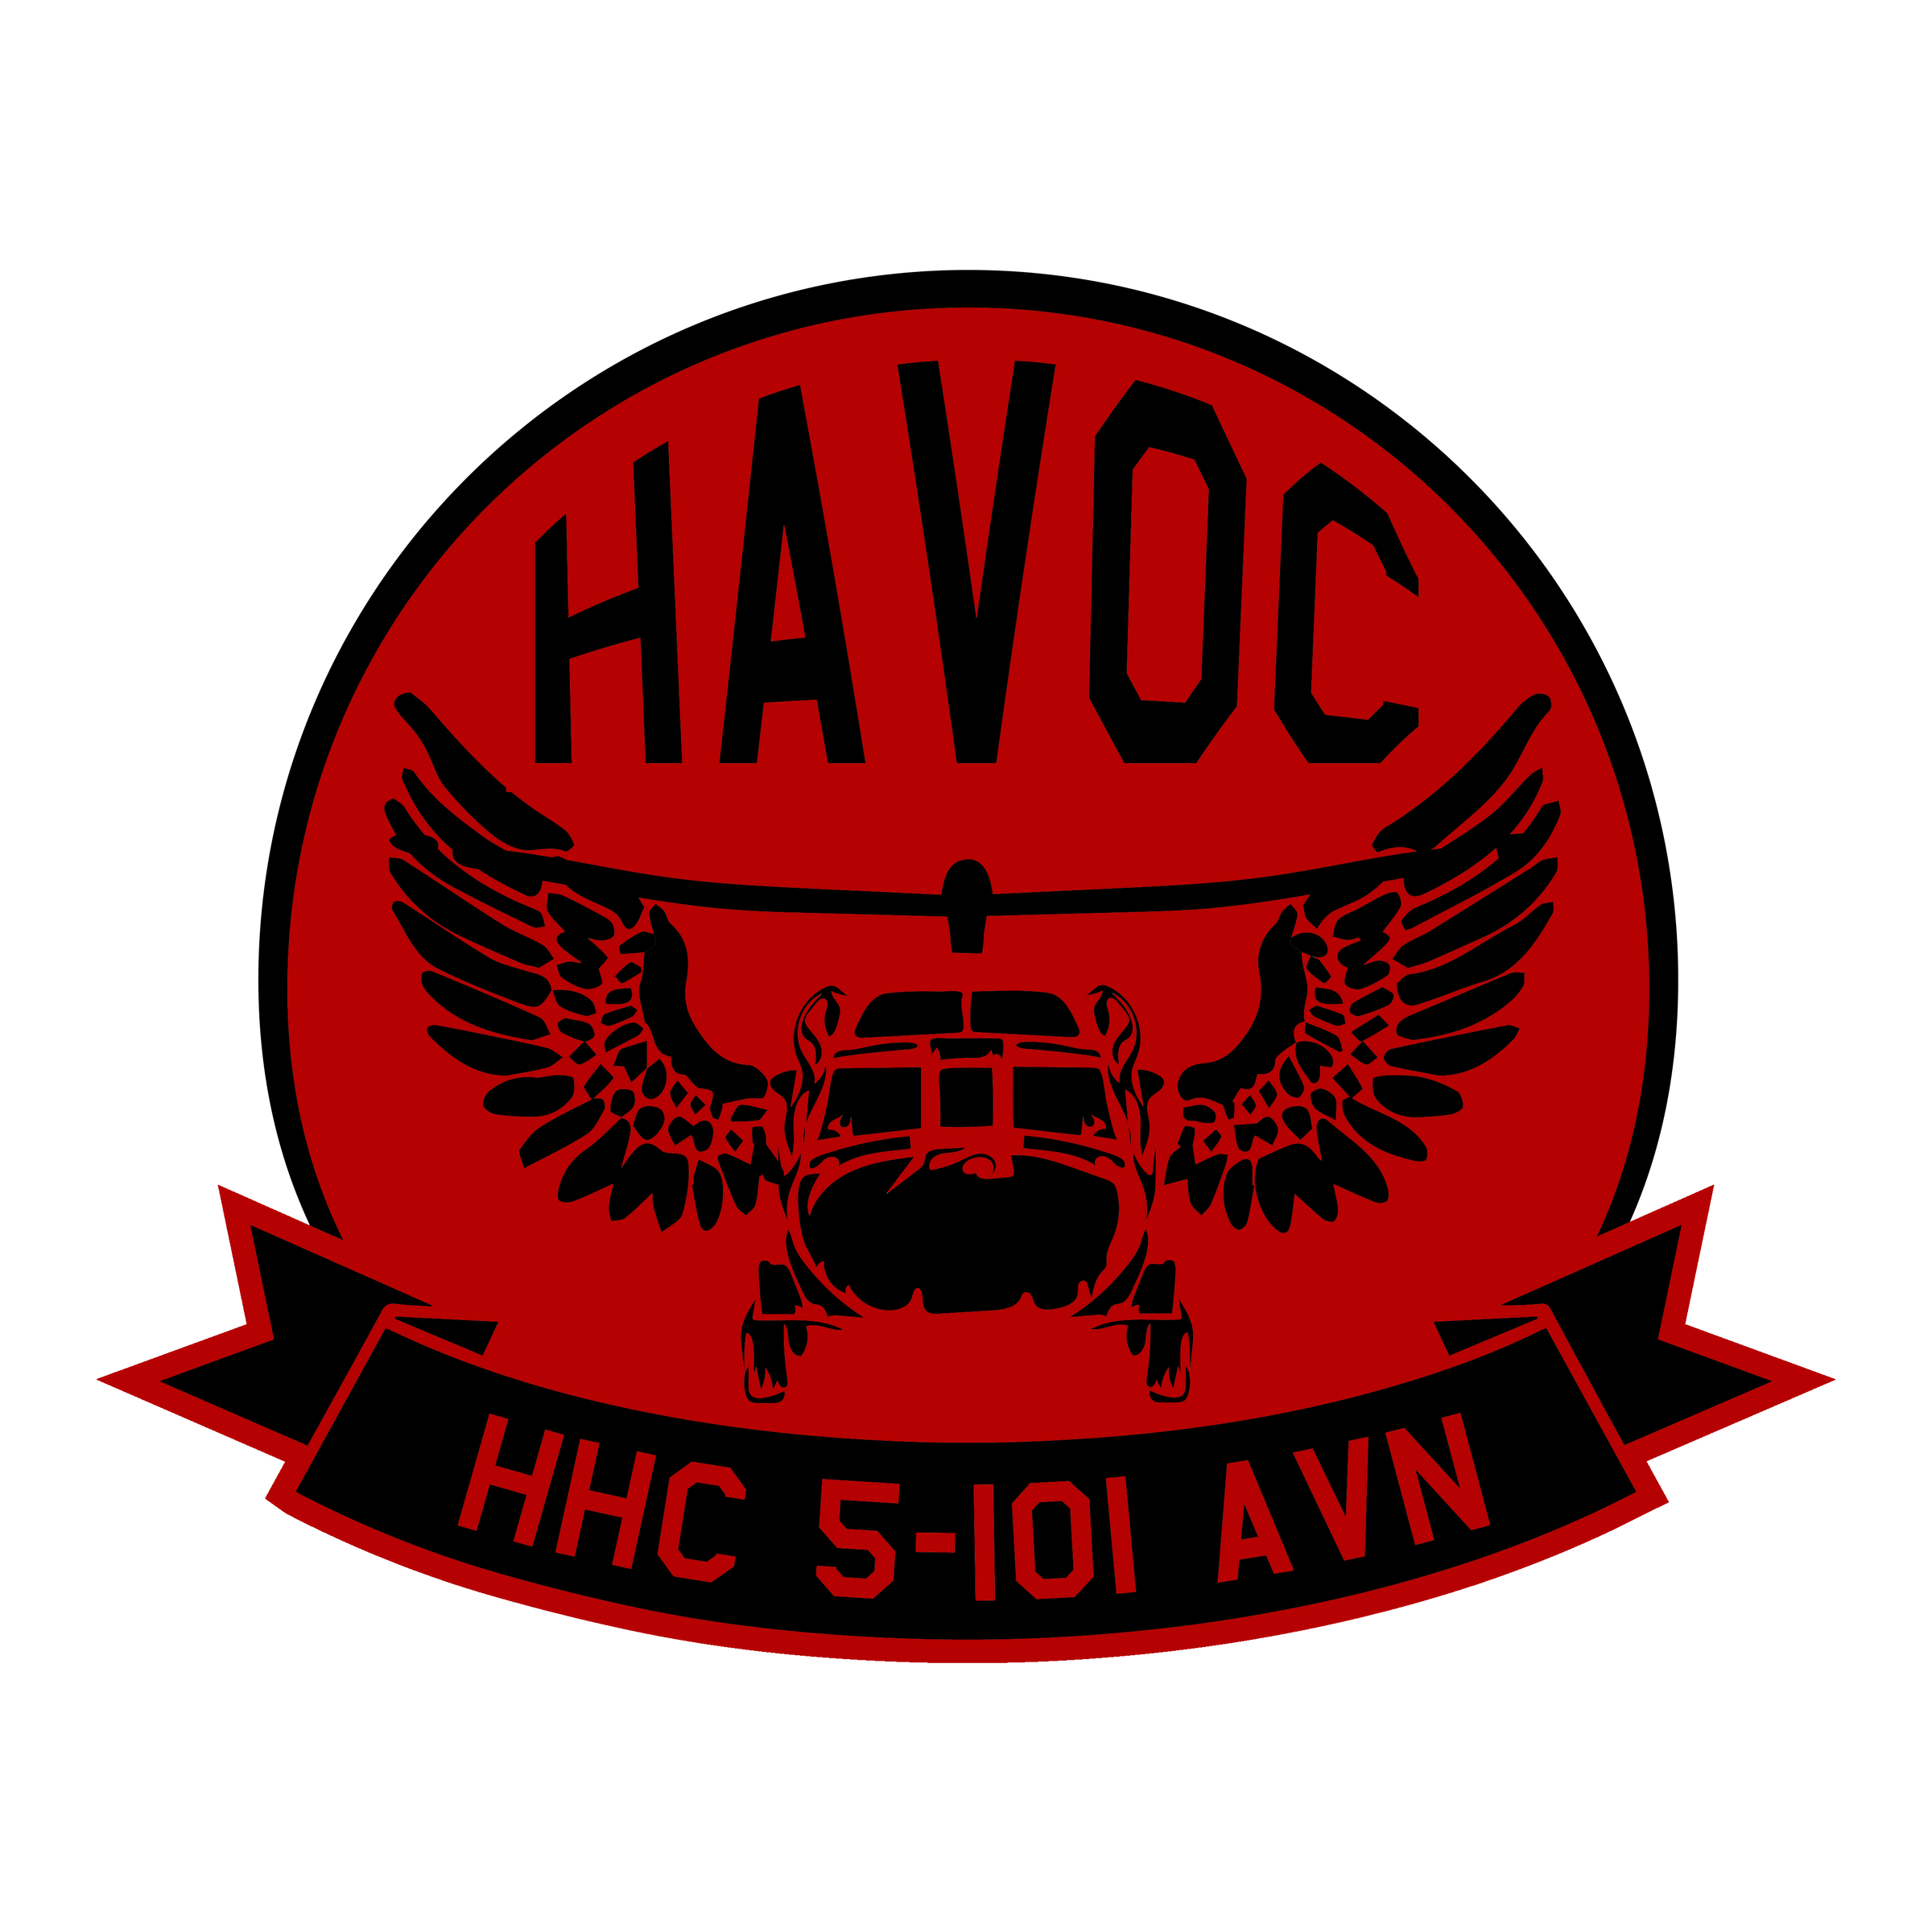 HHC, 5-101 AVN "Havoc"